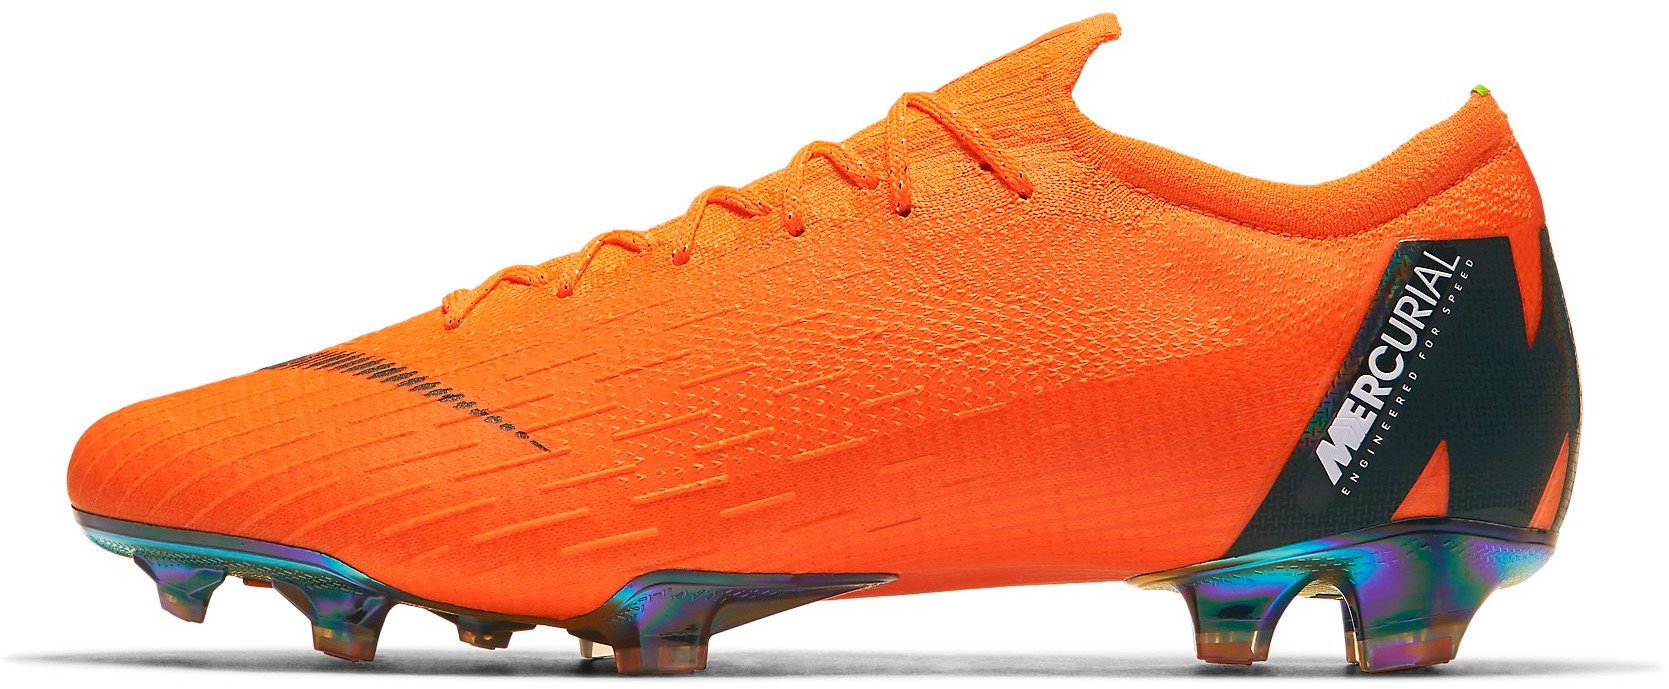 Football shoes Nike VAPOR 12 ELITE FG